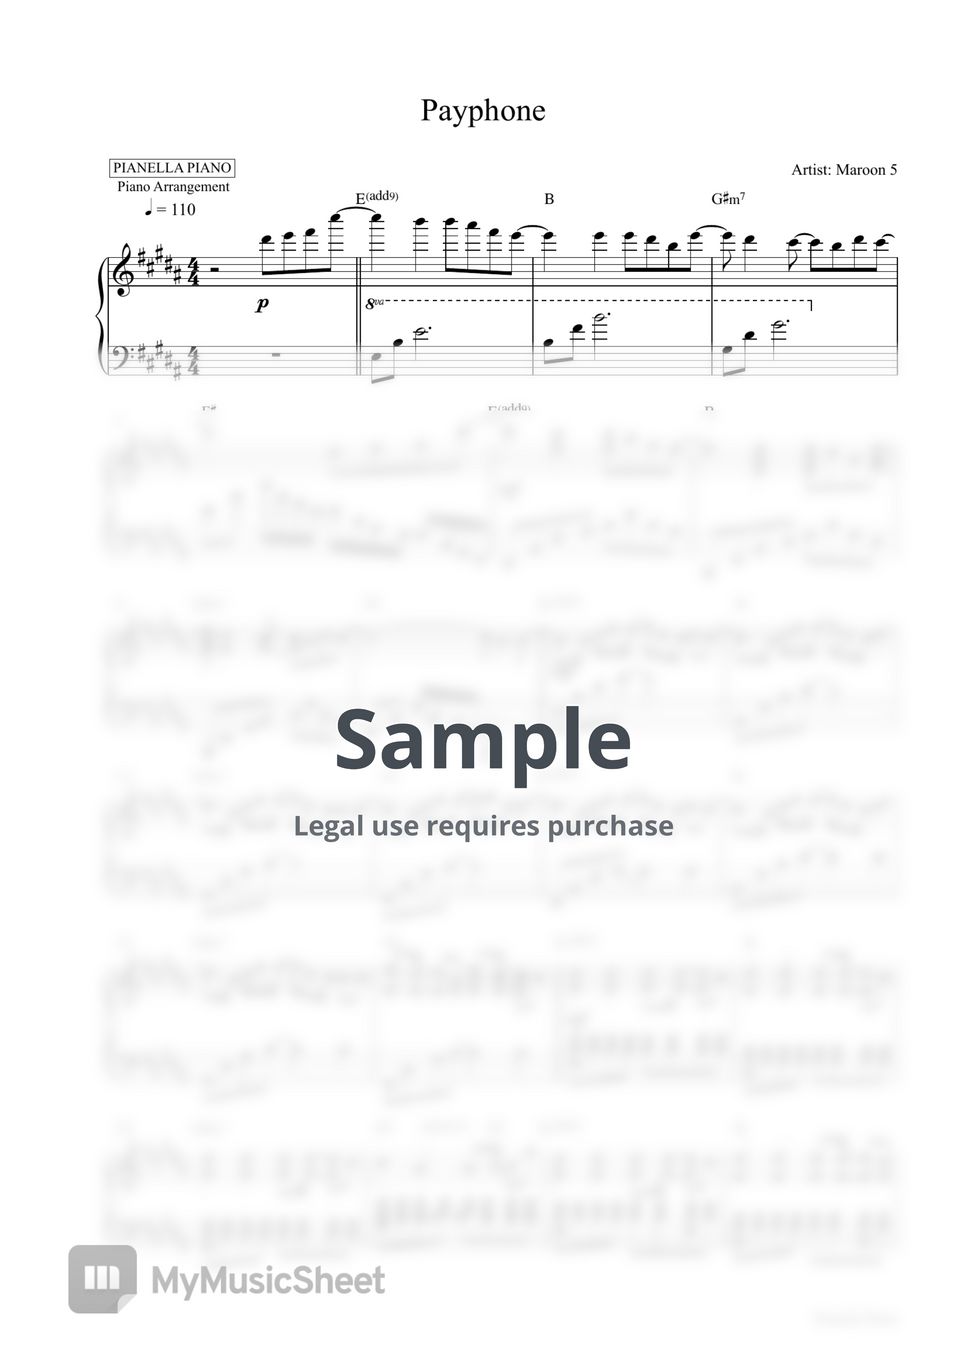 Maroon 5 - Payphone (Piano Sheet) by Pianella Piano